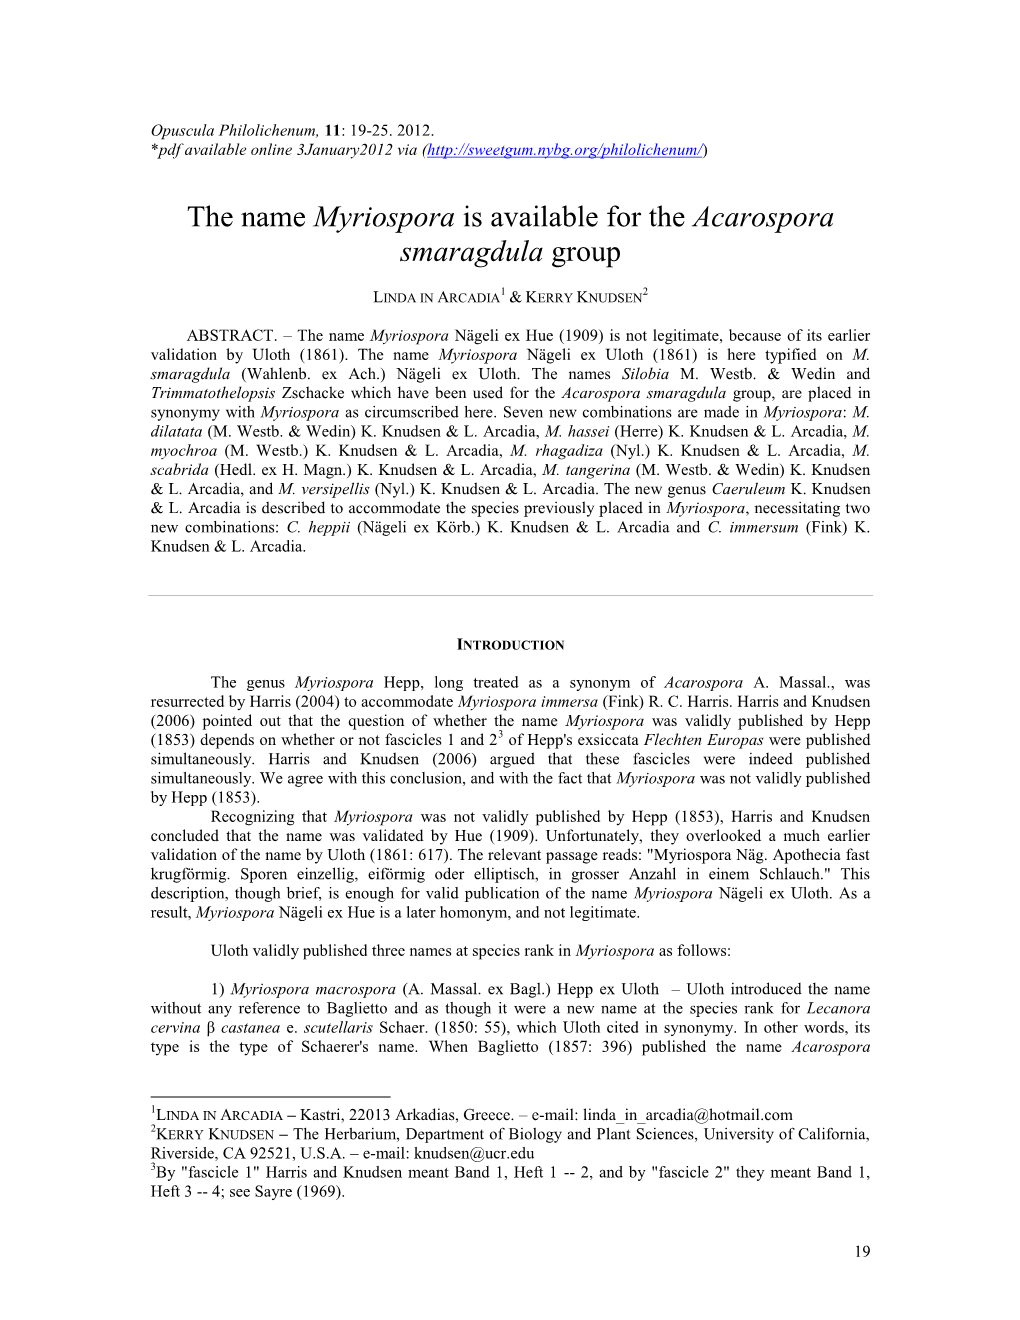 The Name Myriospora Is Available for the Acarospora Smaragdula Group